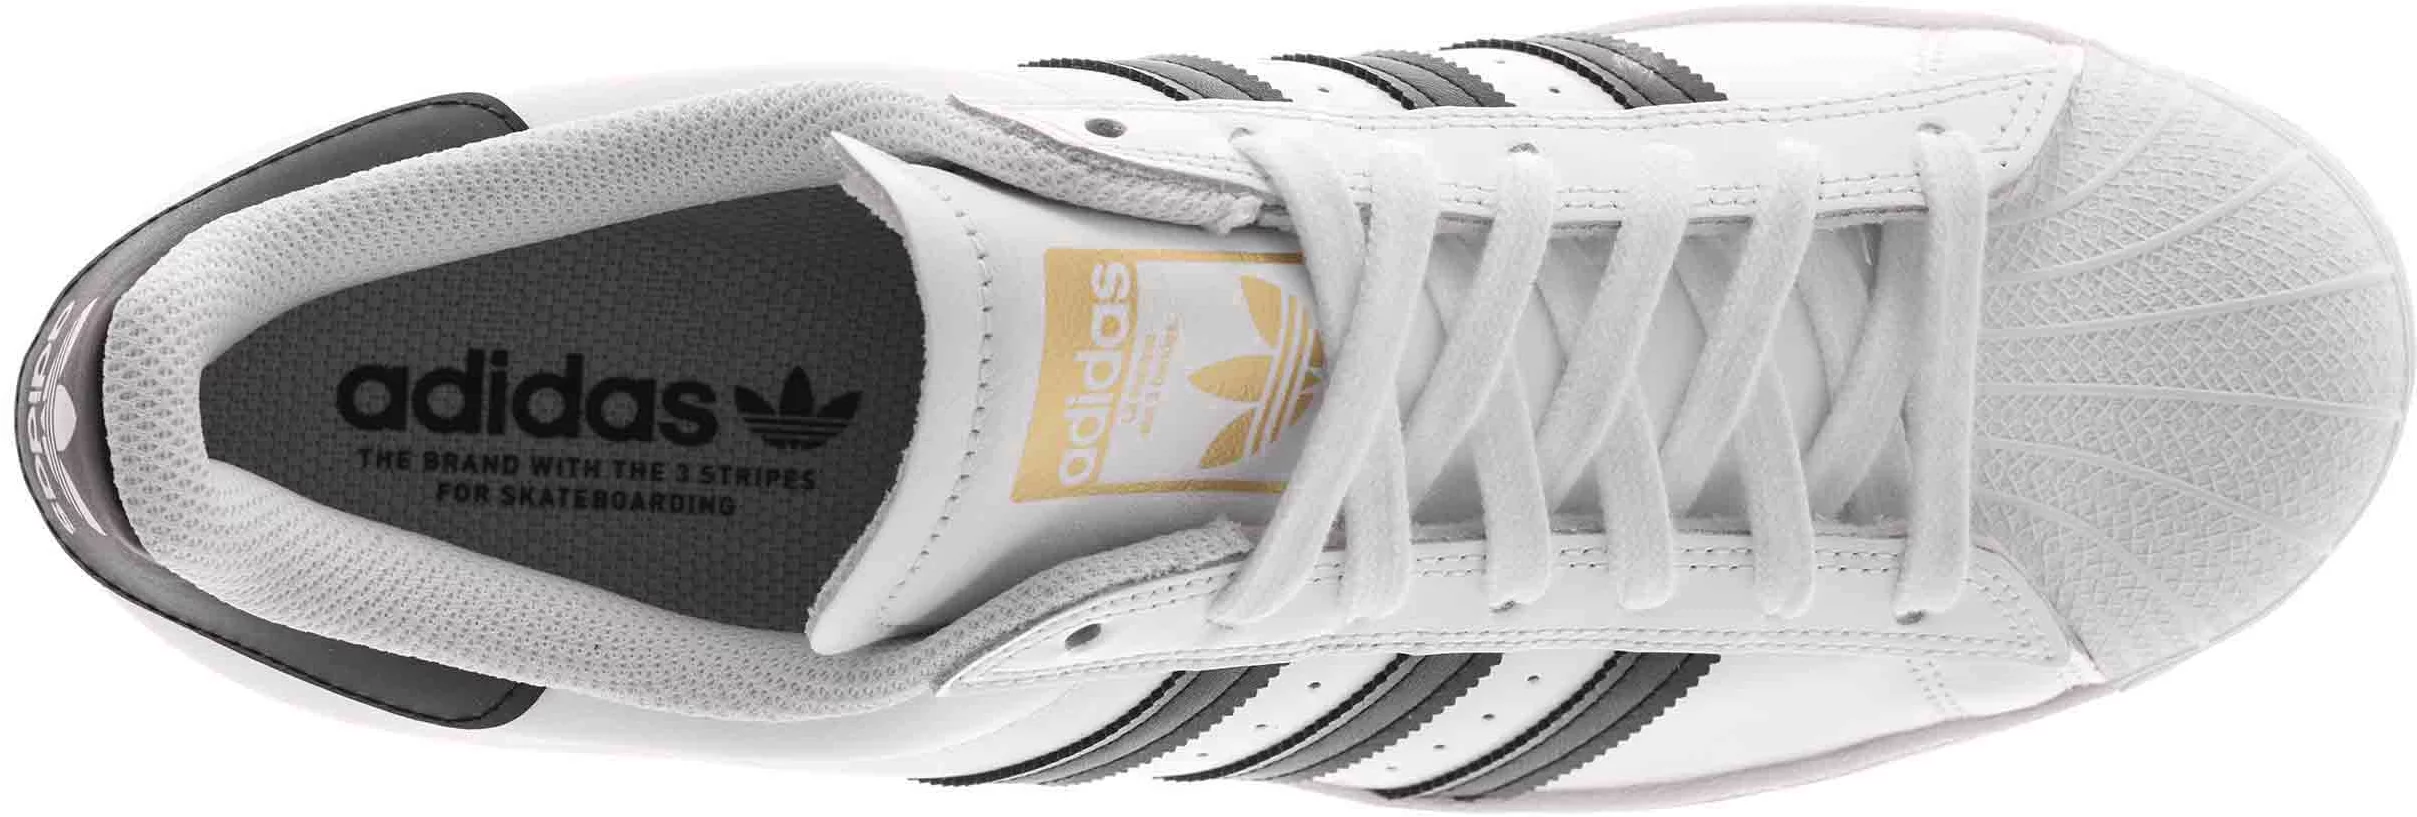 Adidas Superstar ADV Skate Shoes - Shipping | Tactics